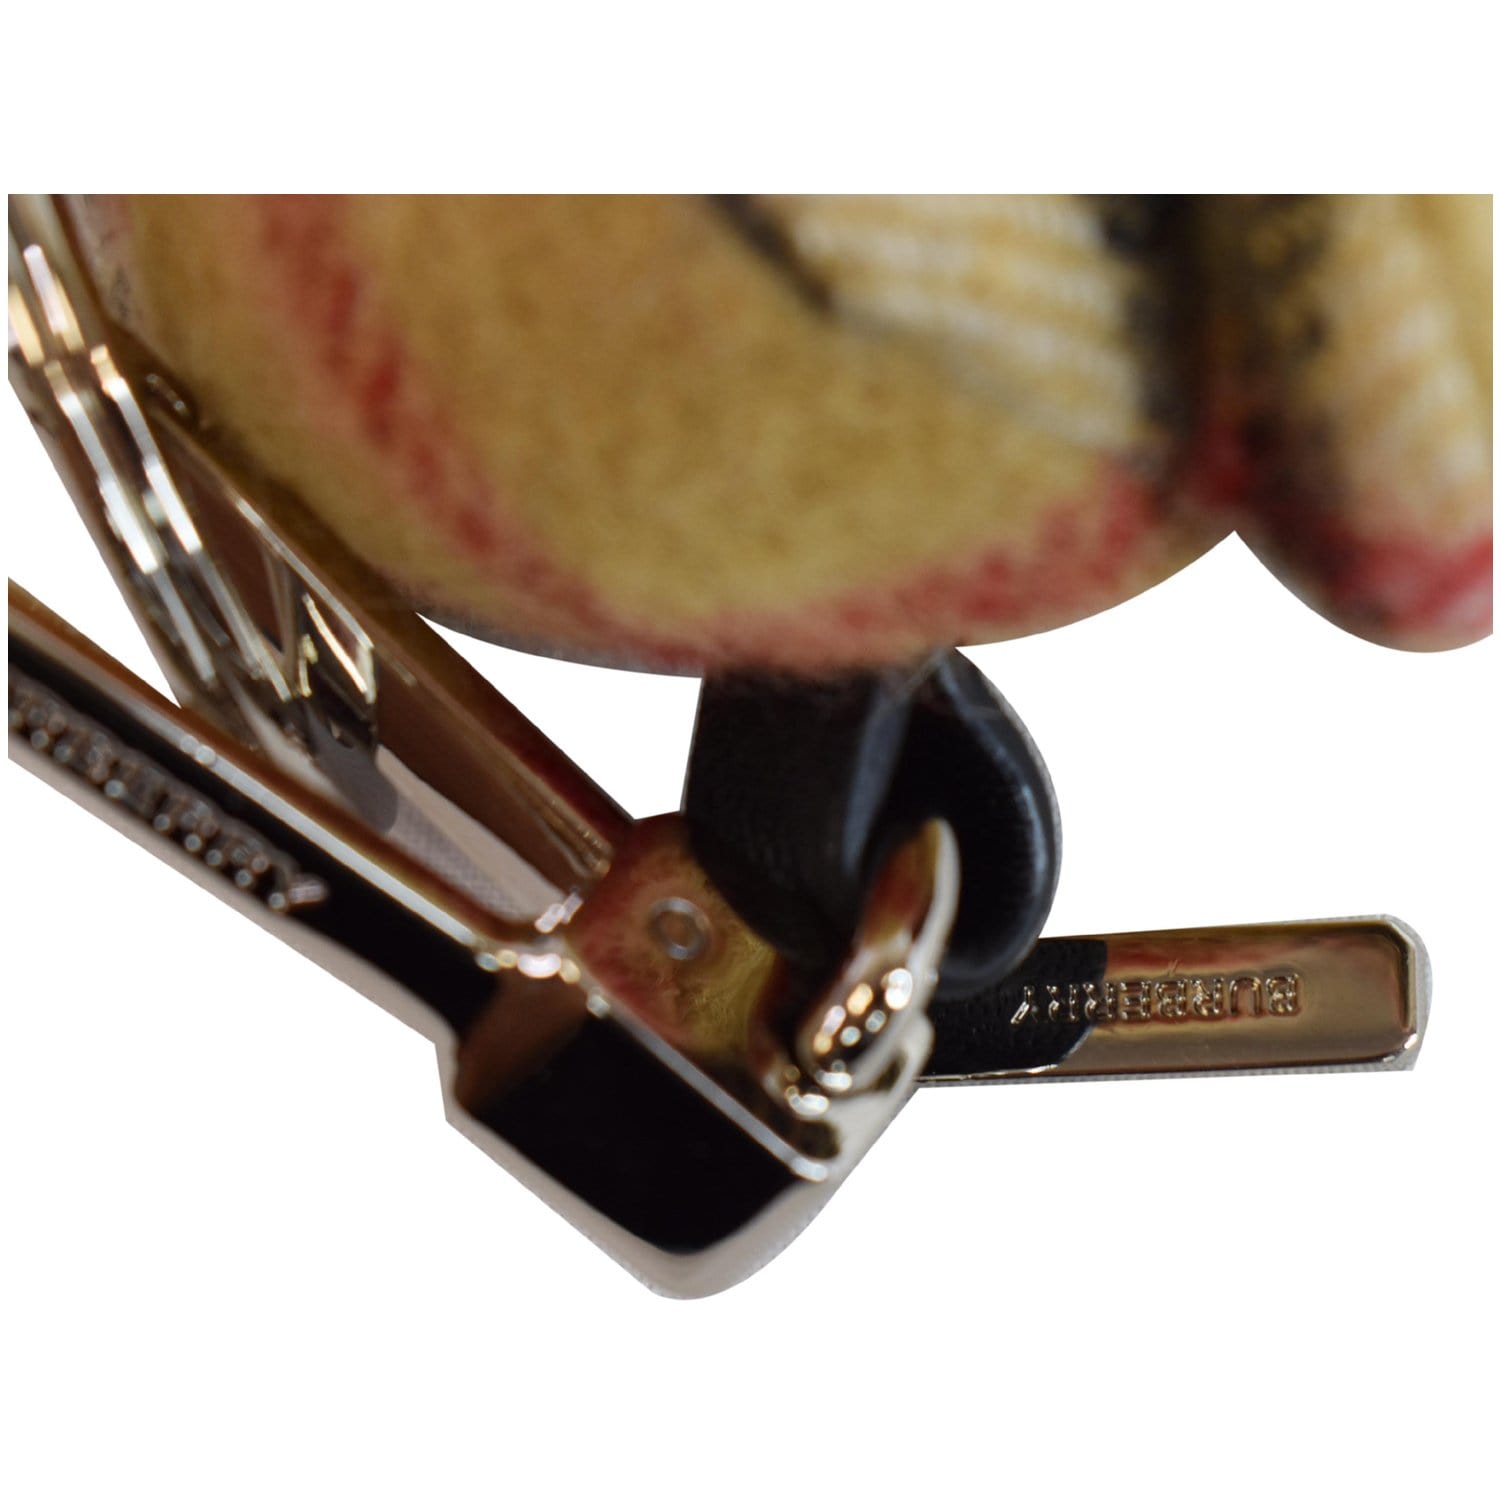 Key holders Burberry - Thomas Bear patent leather key holder - 8016872